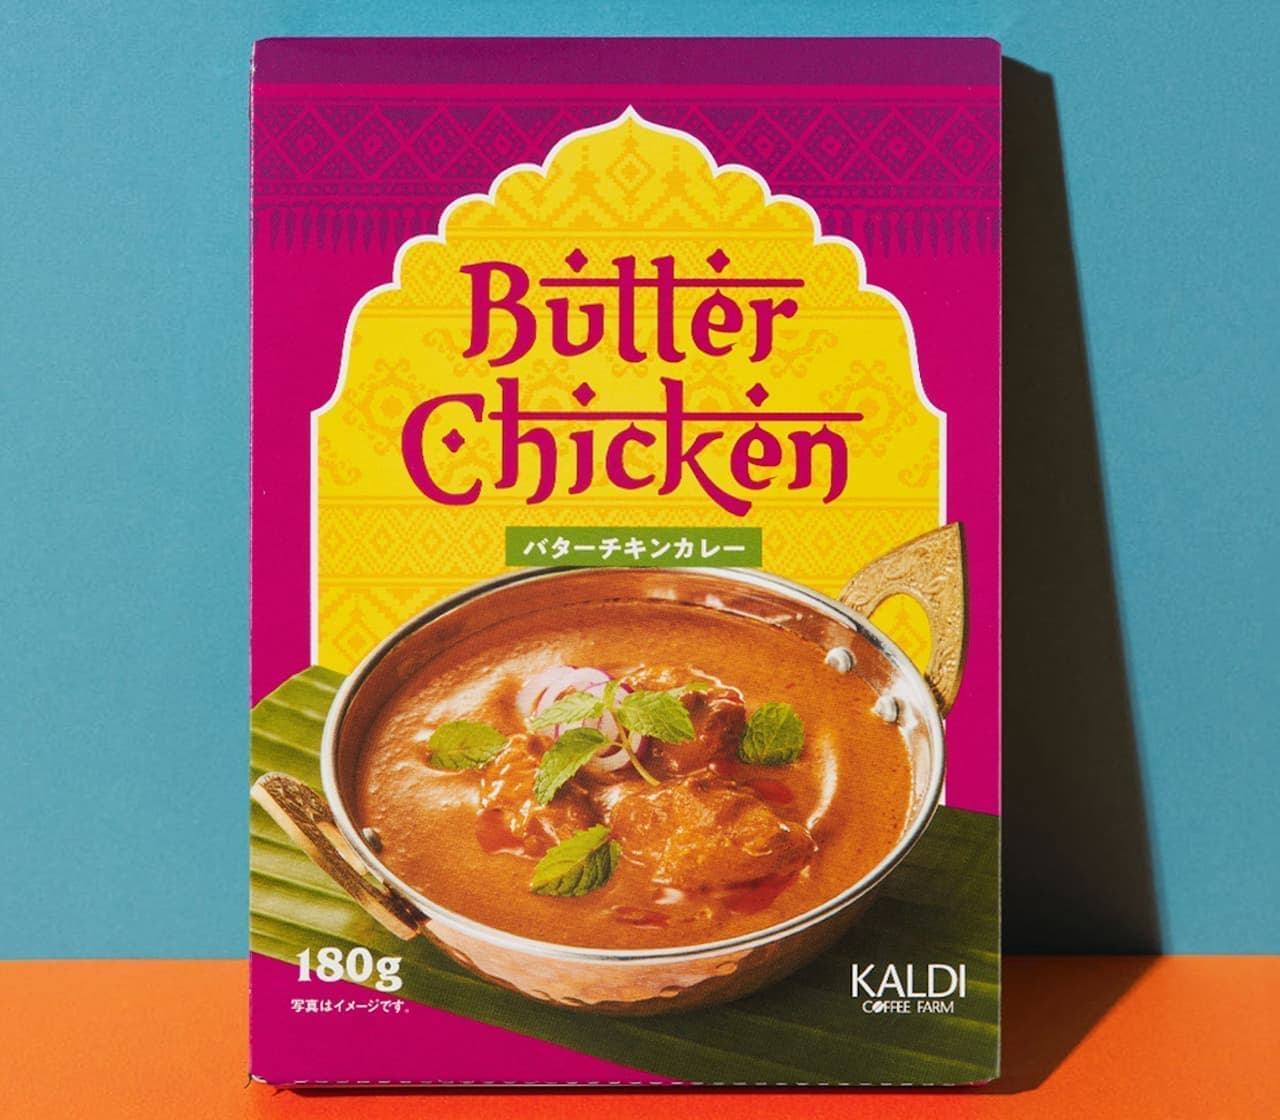 KALDI "Original Indian Curry Butter Chicken" renewed